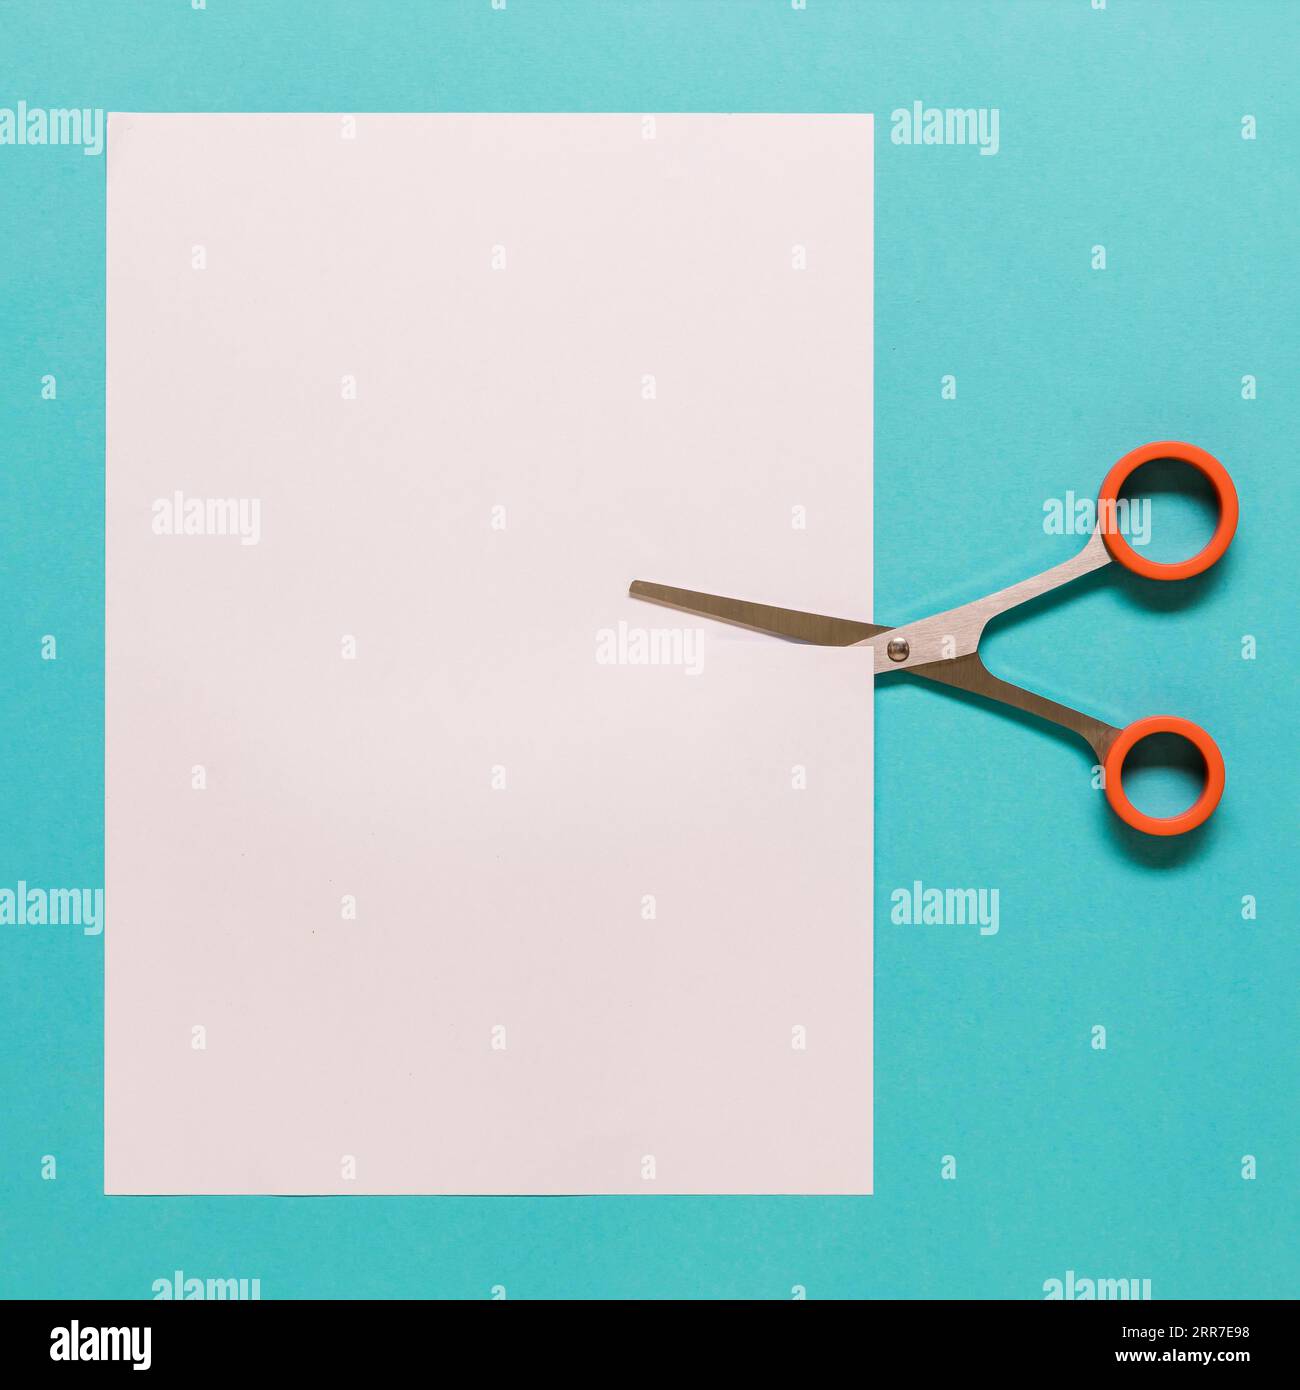 Scissors cutting paper blue background Stock Photo